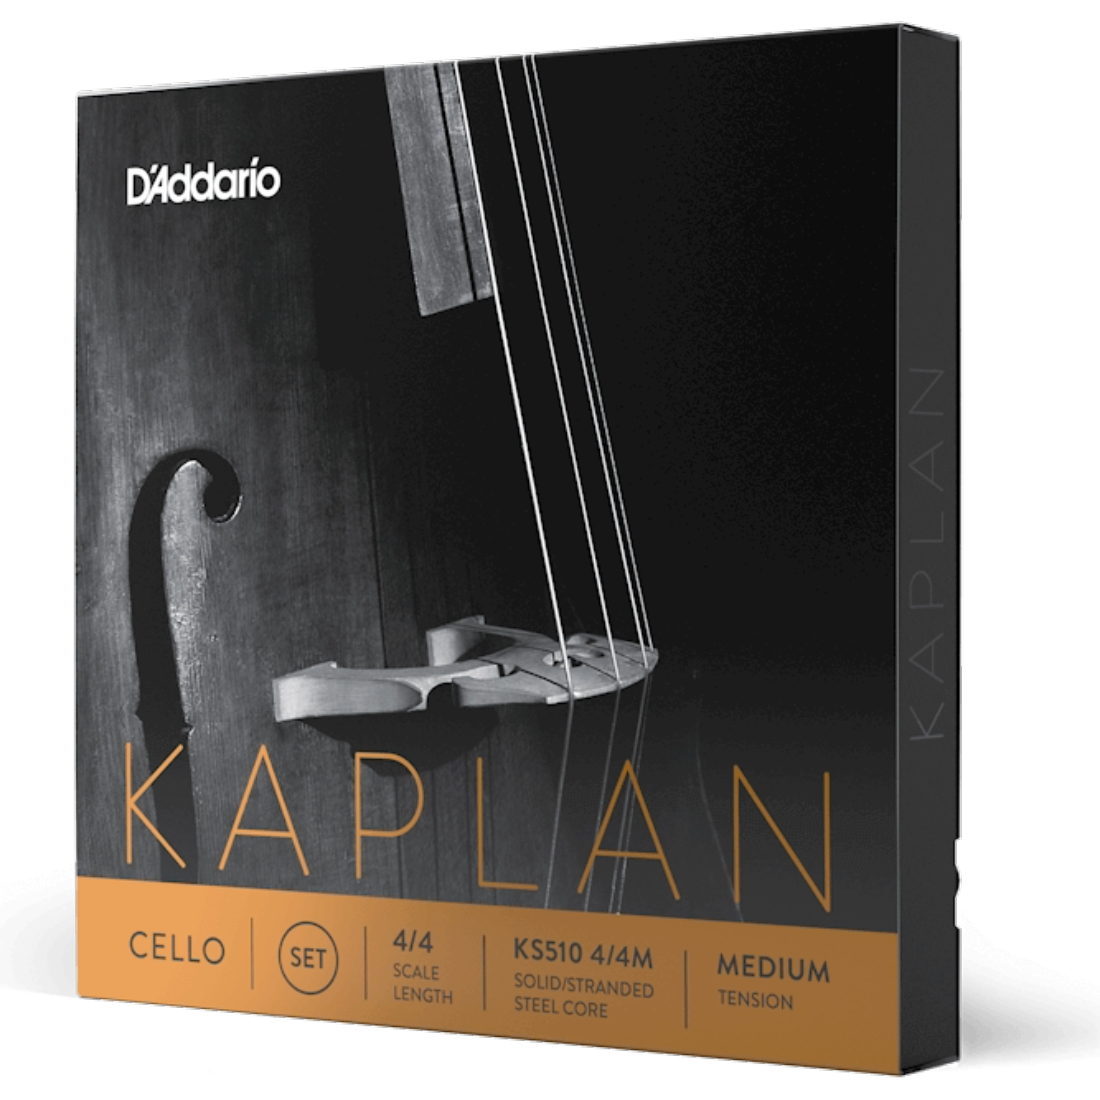 Black and white box of Kaplan Solutions full scale cello strings, full set